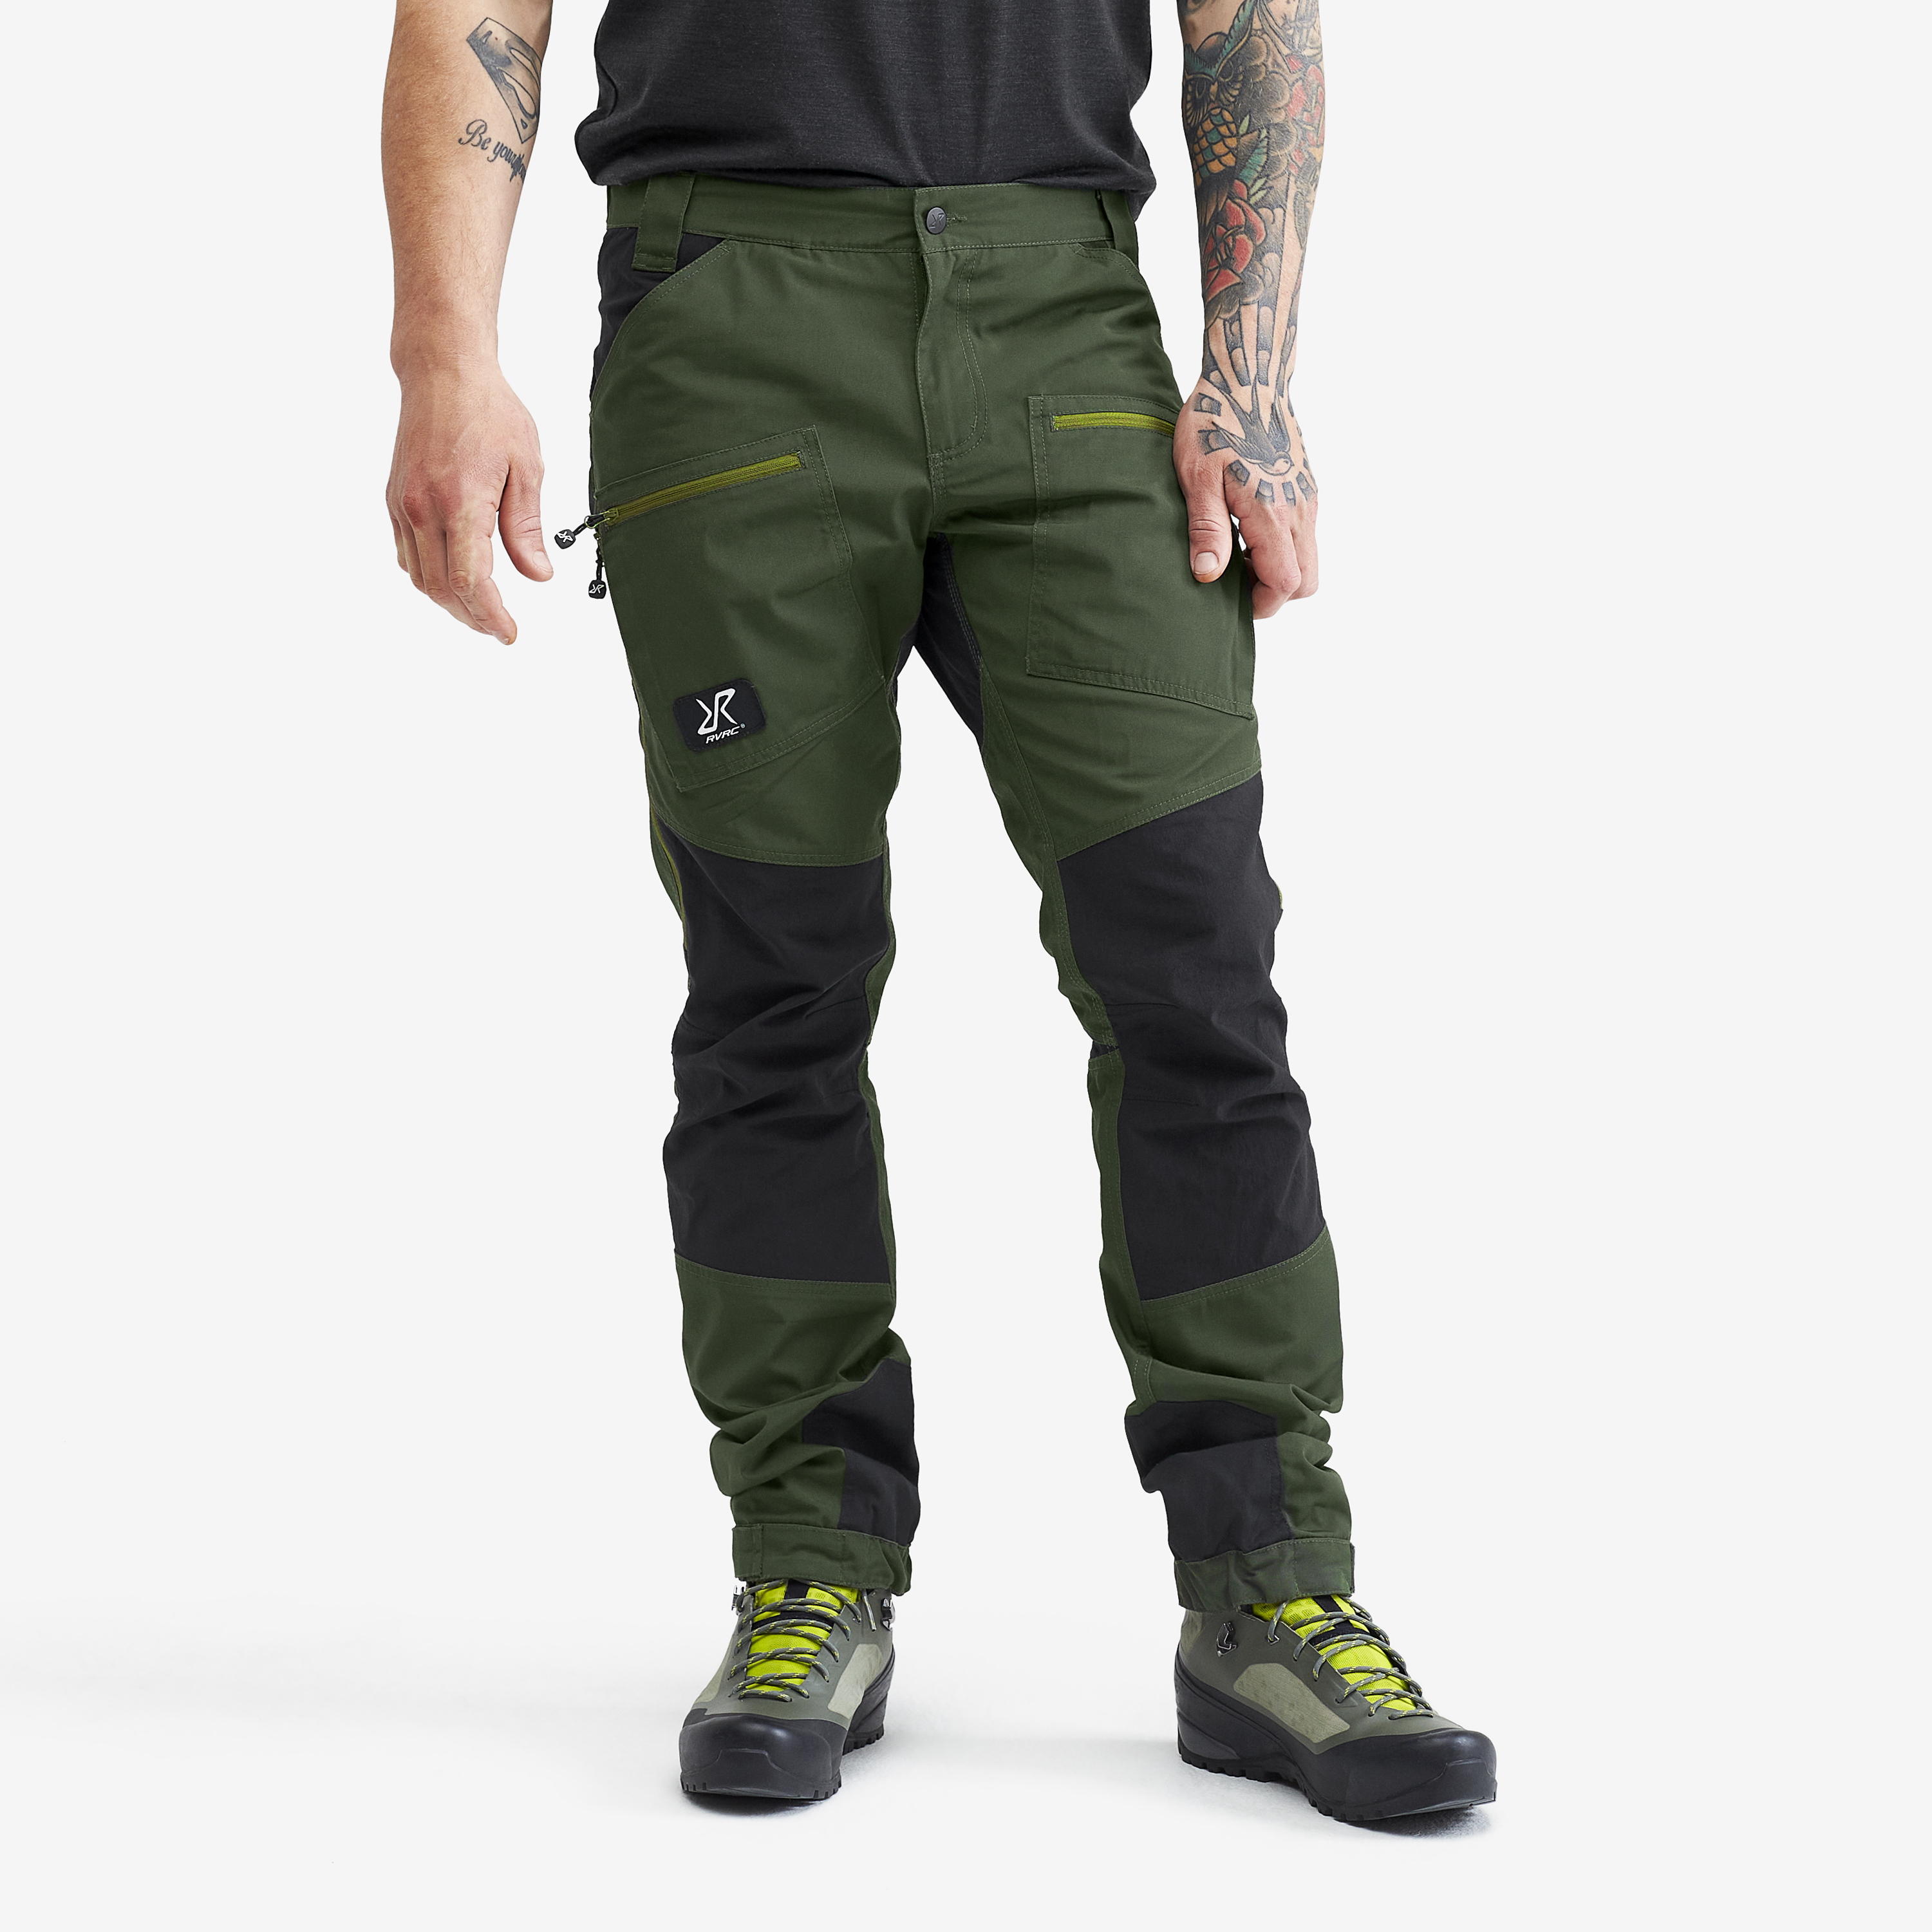 Nordwand Pro Pants Green/Black Uomo